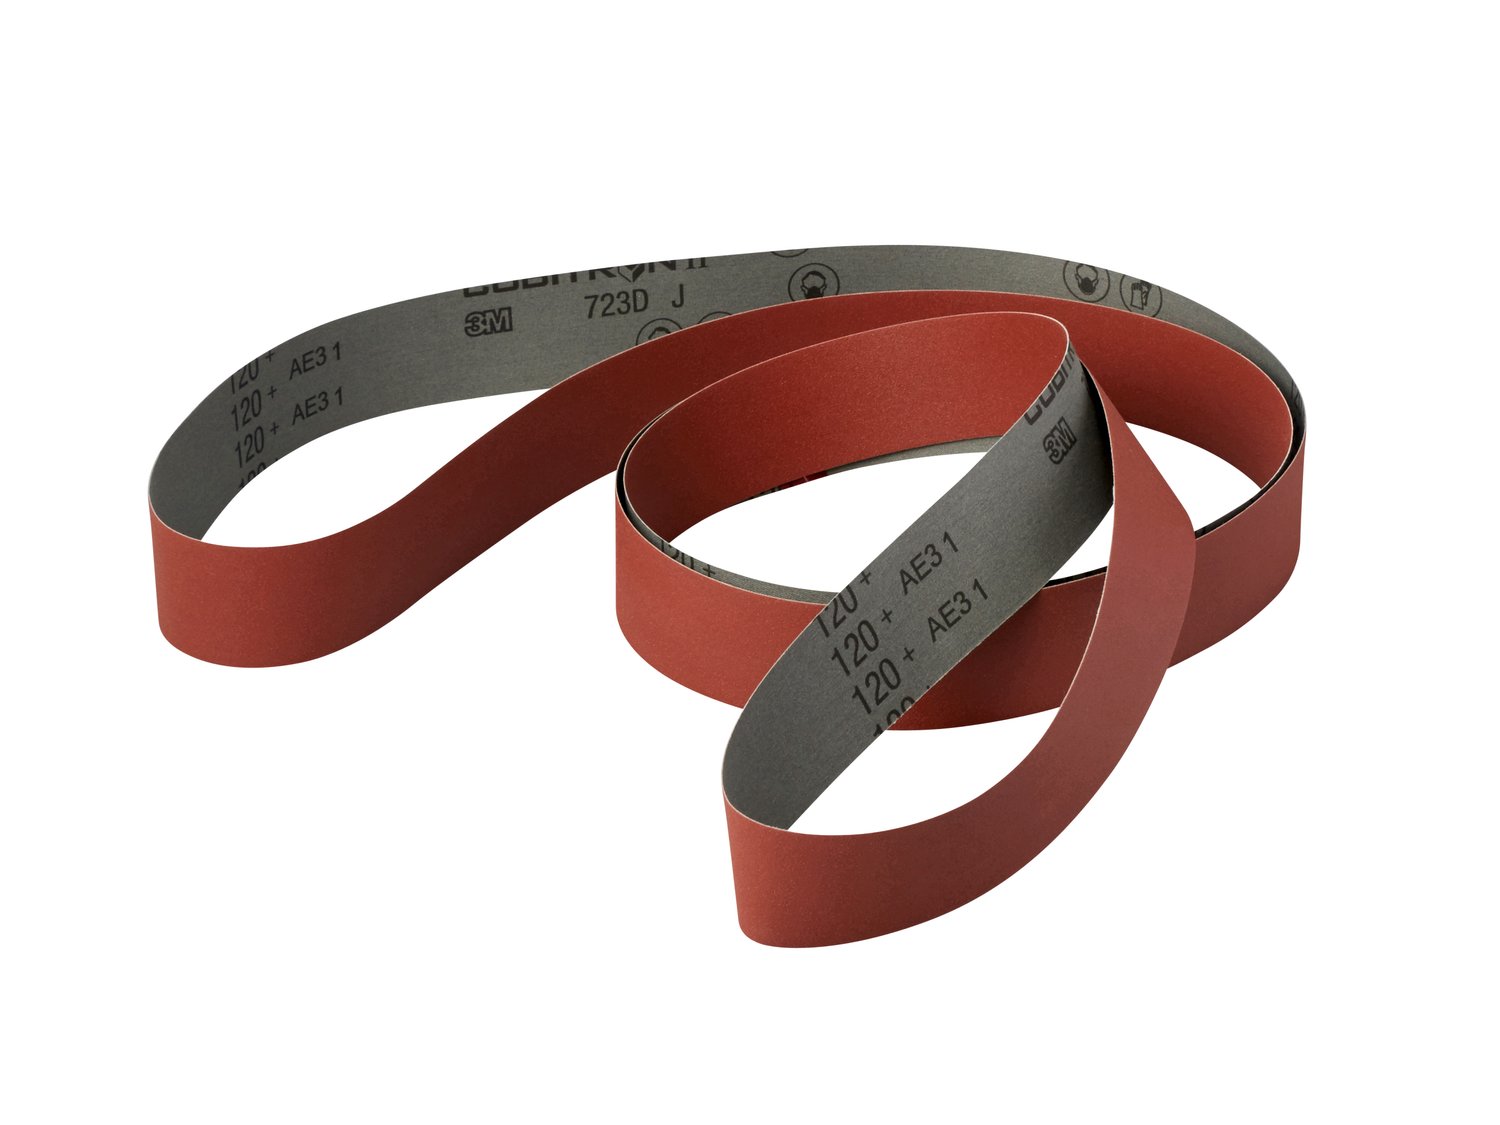 7010534658 - 3M Cubitron ll Cloth Belt 723D, 150+ J-weight, 2 in x 18-27/32 in,
Film-lok, Full-flex